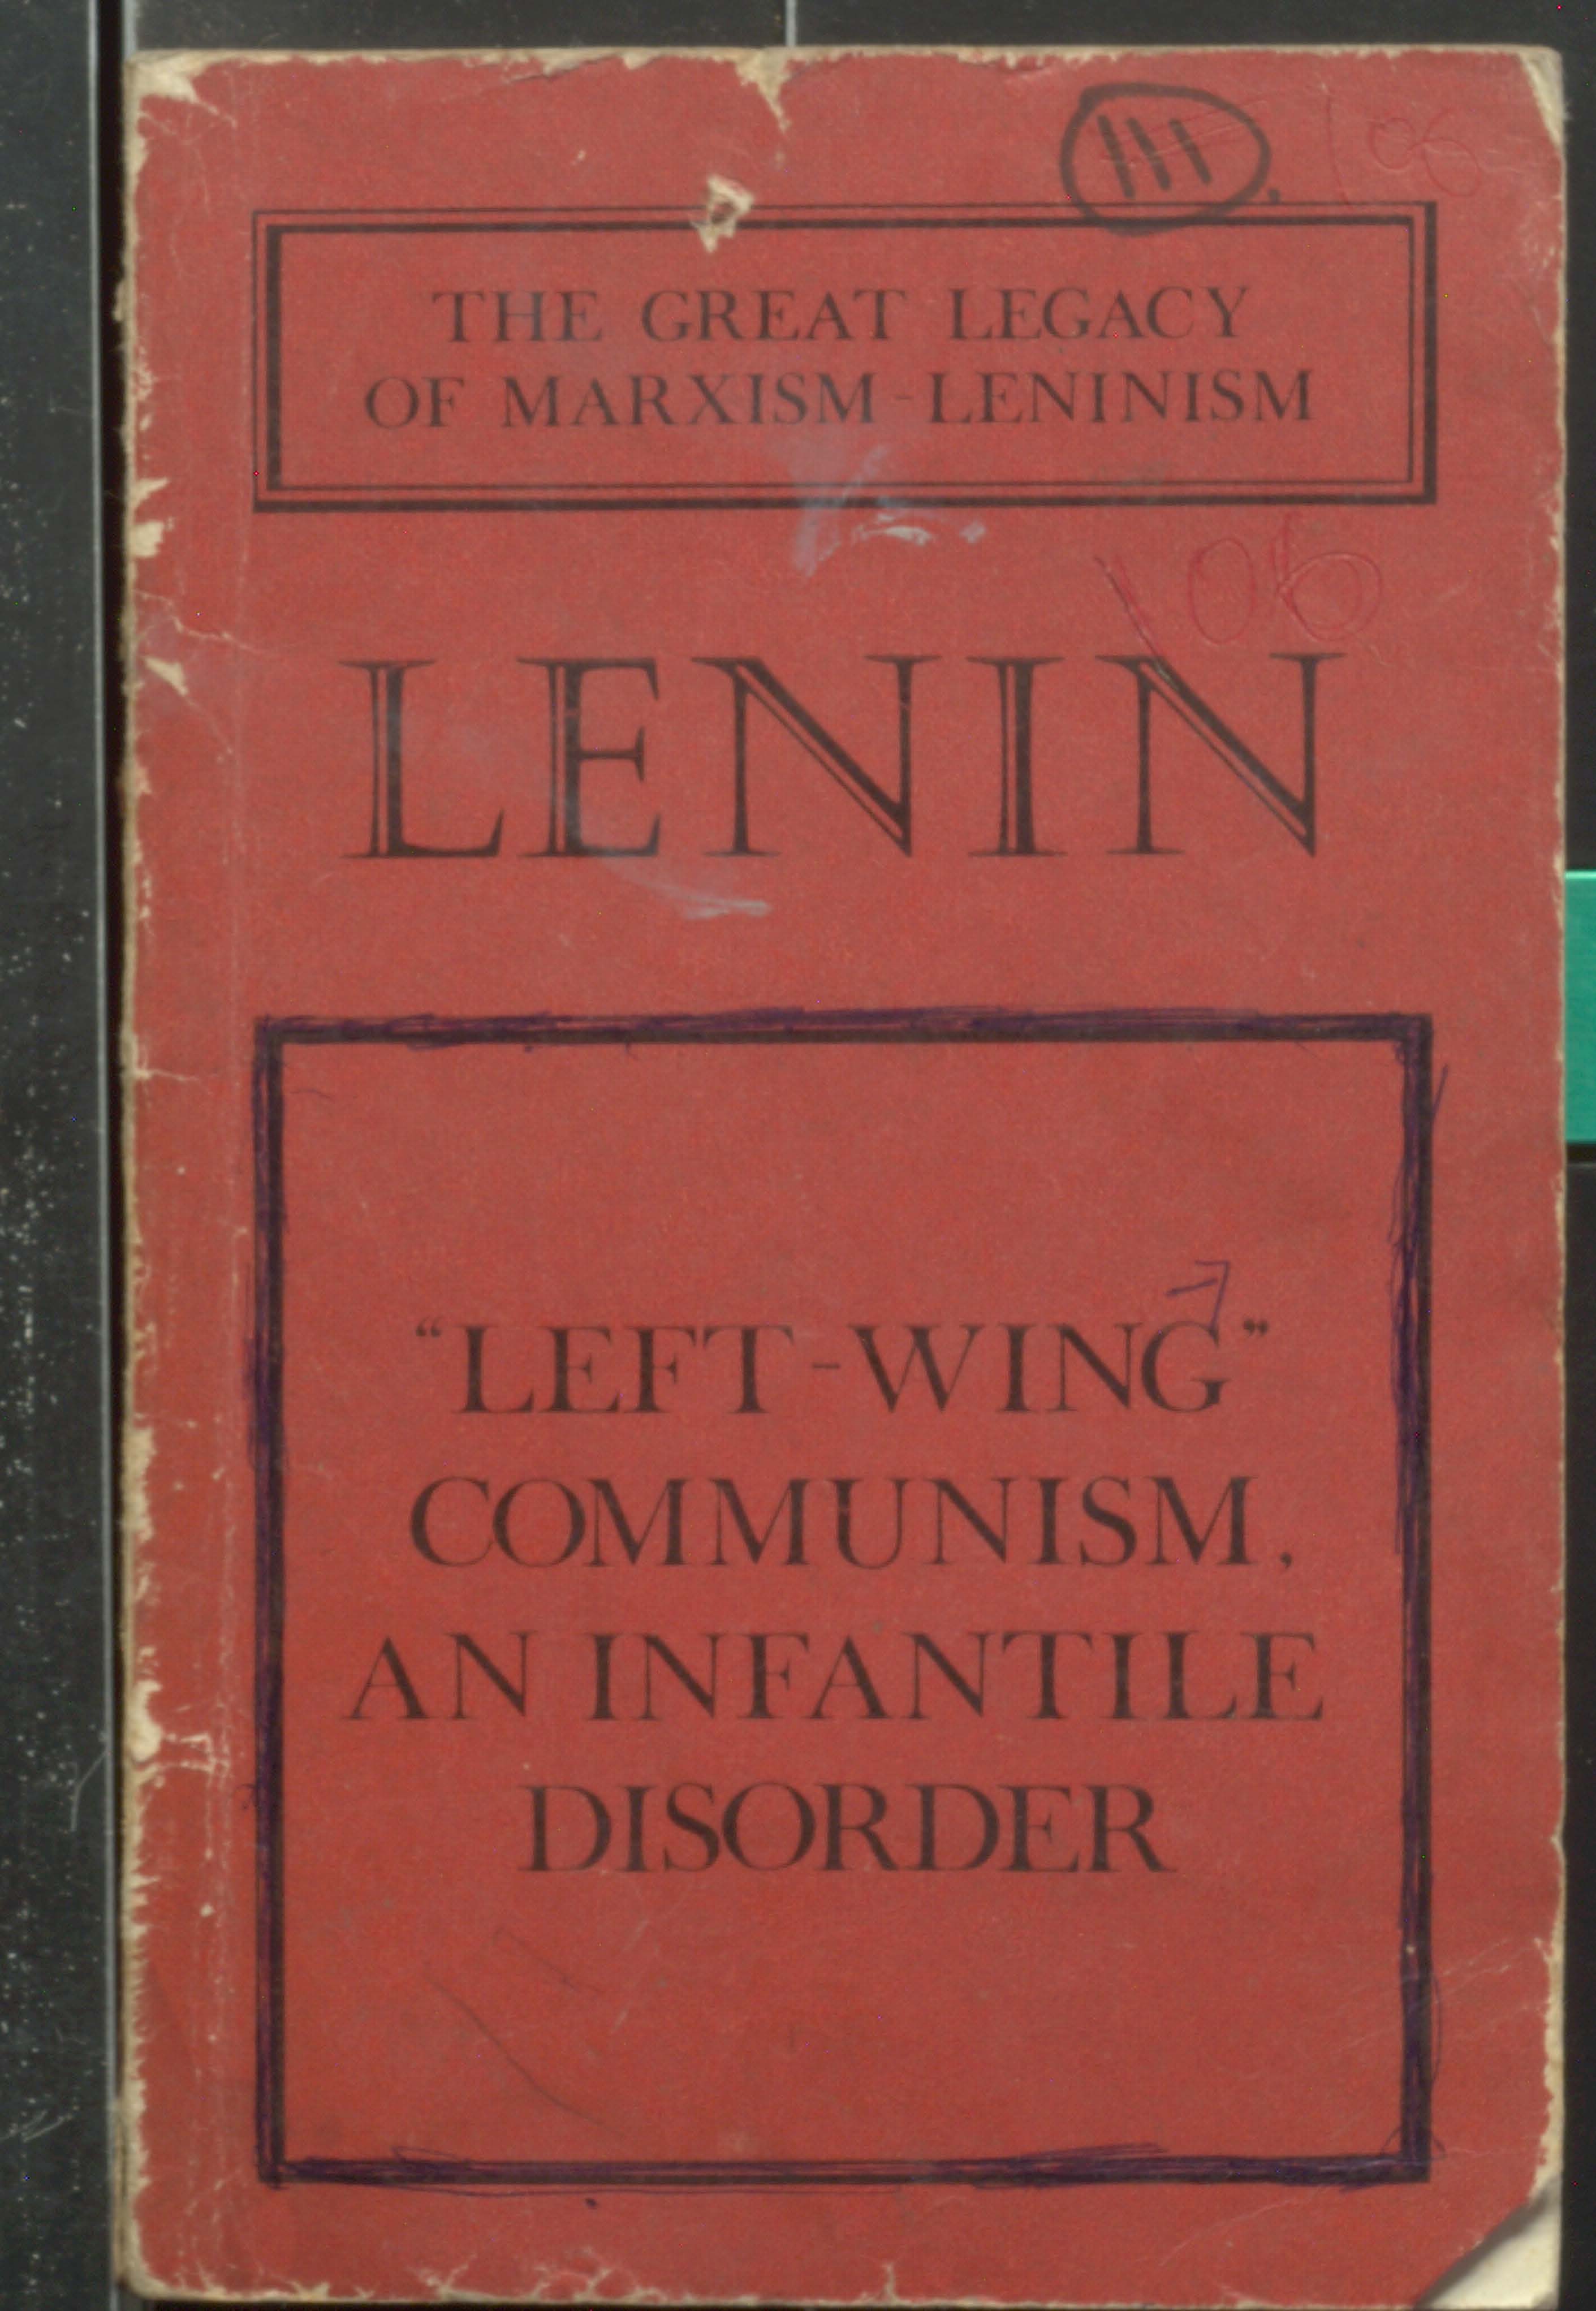 Lenin"lrft-wing communism an infantile disorder